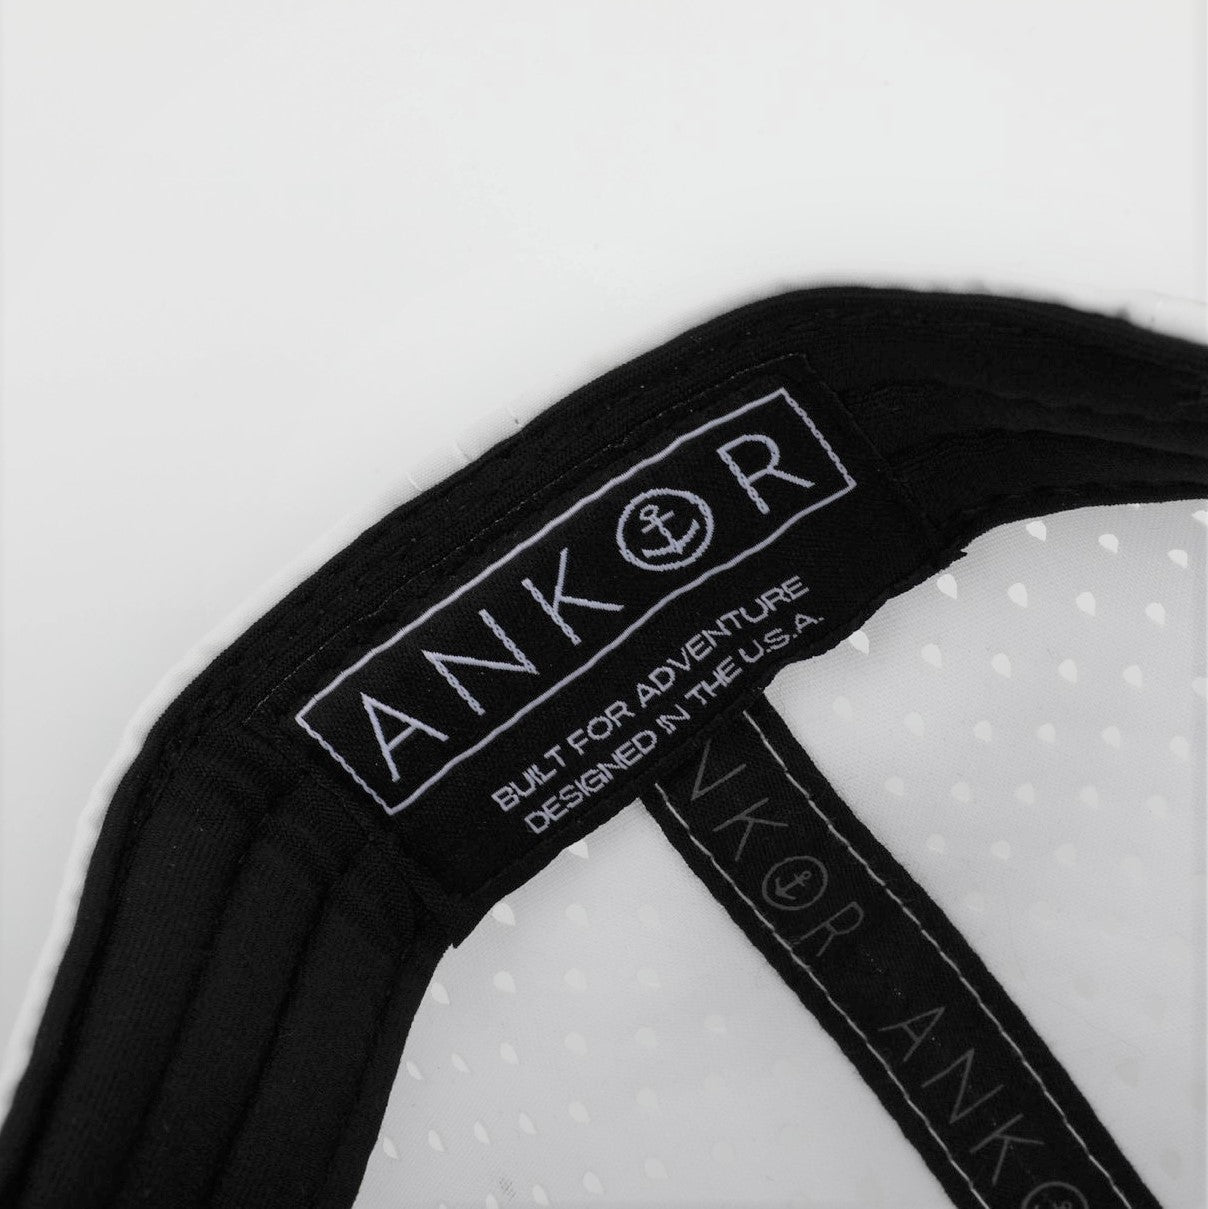 ANKOR Headwear: Premium Headwear without the Premium Price